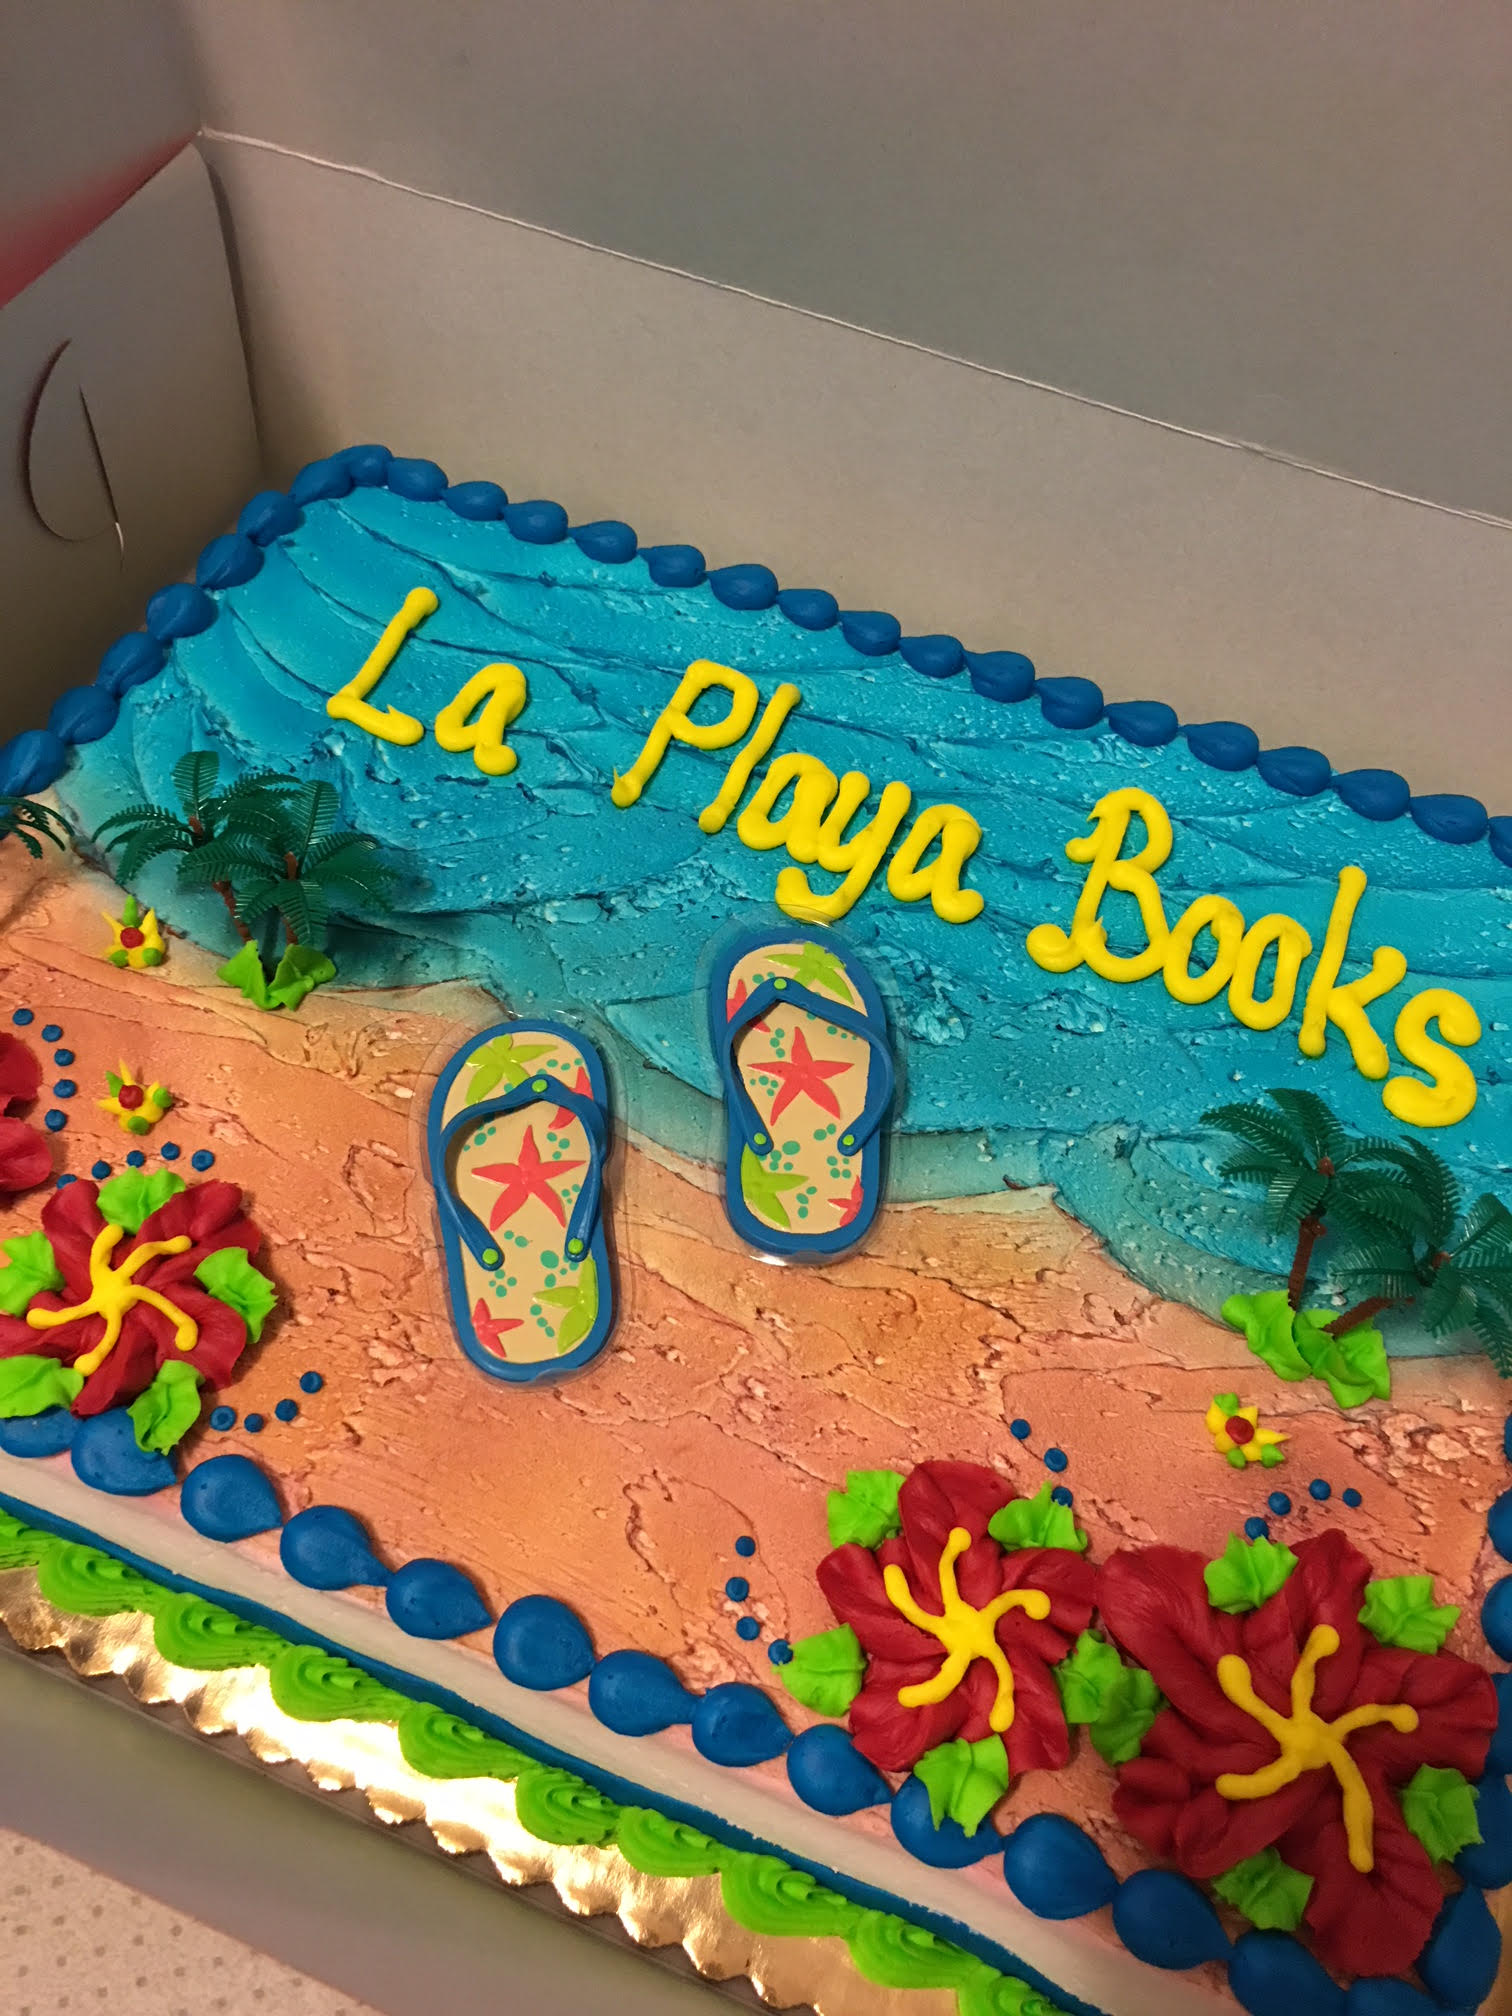 La Playa Book's IBD cake.